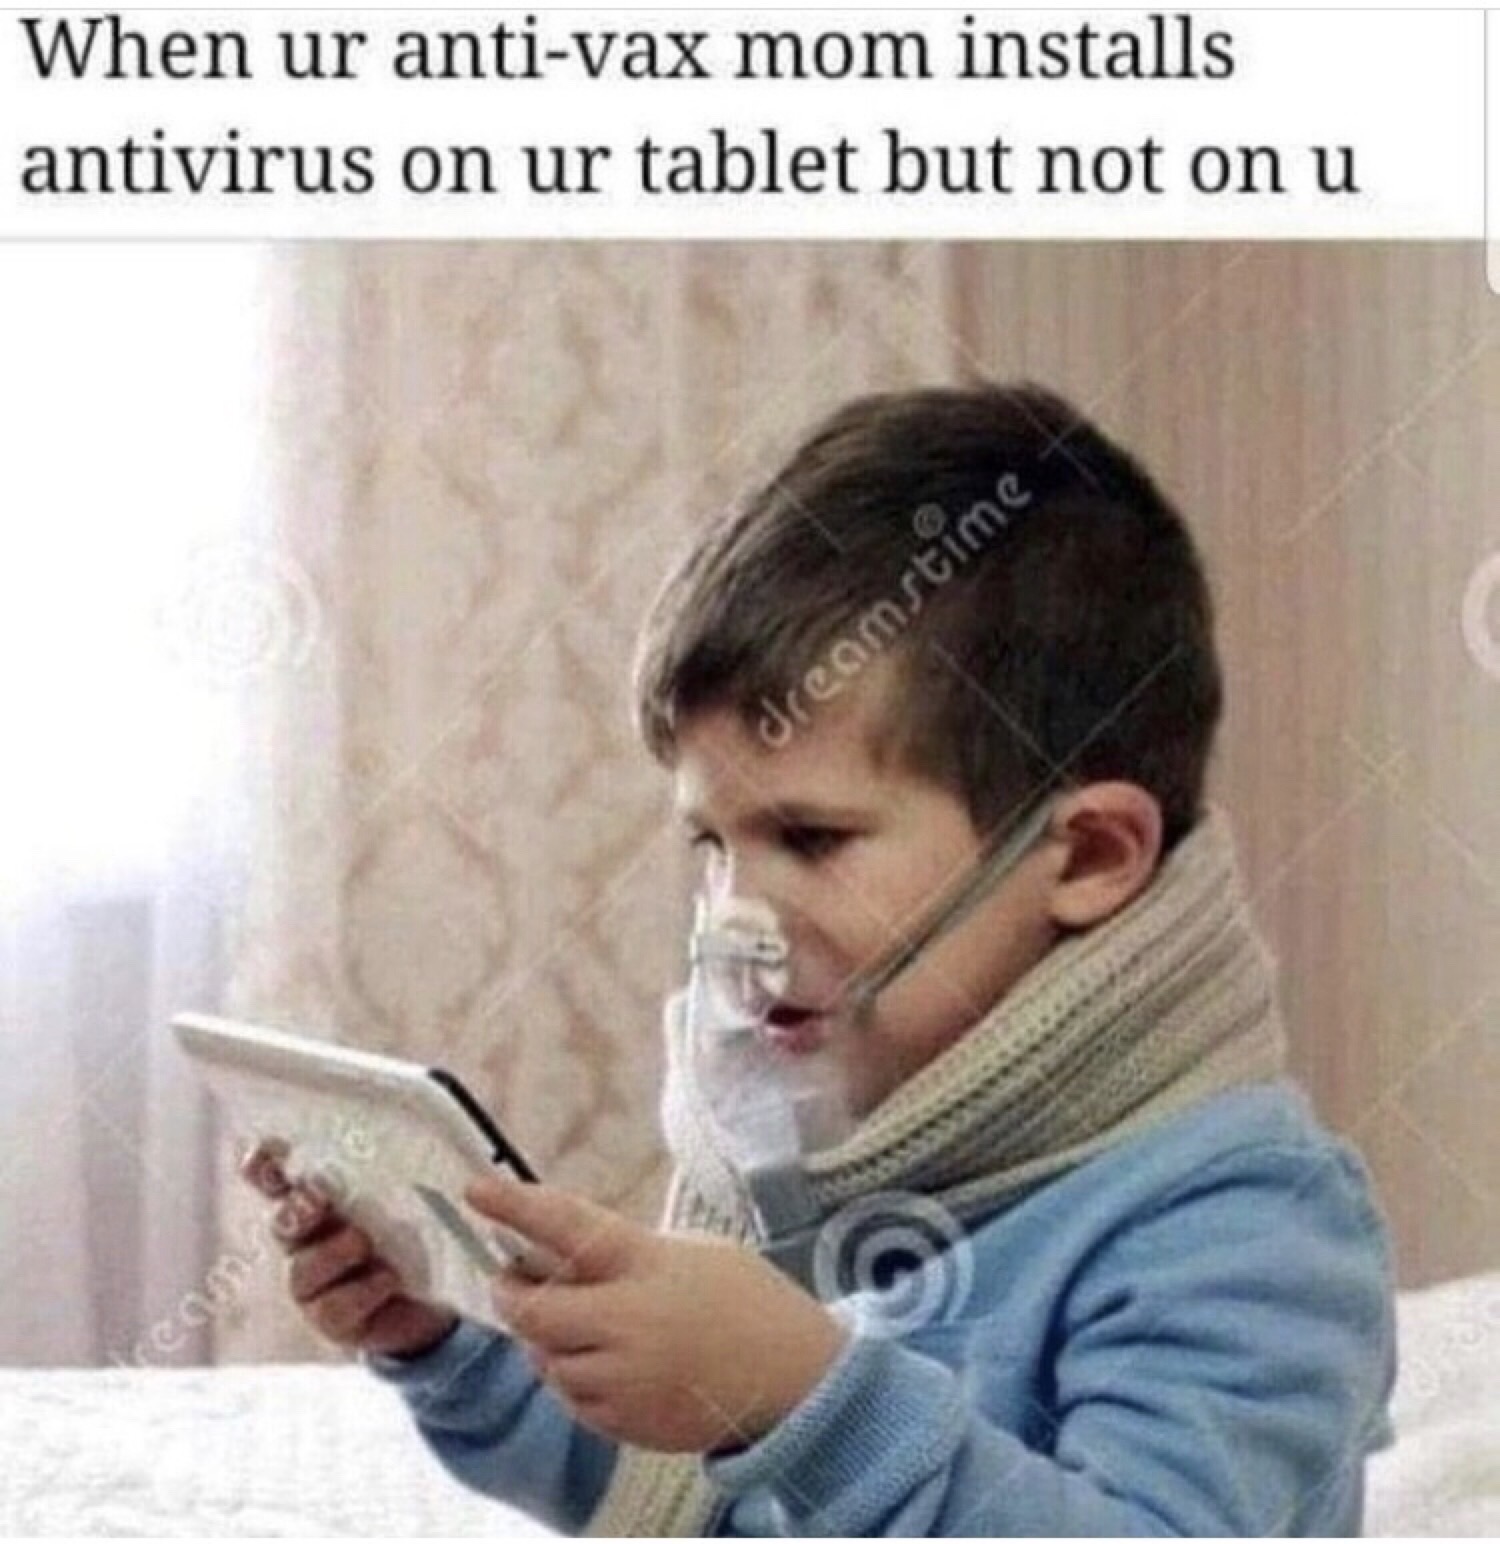 offensive memes - When ur antivax mom installs antivirus on ur tablet but not on u dreamstime eomsc